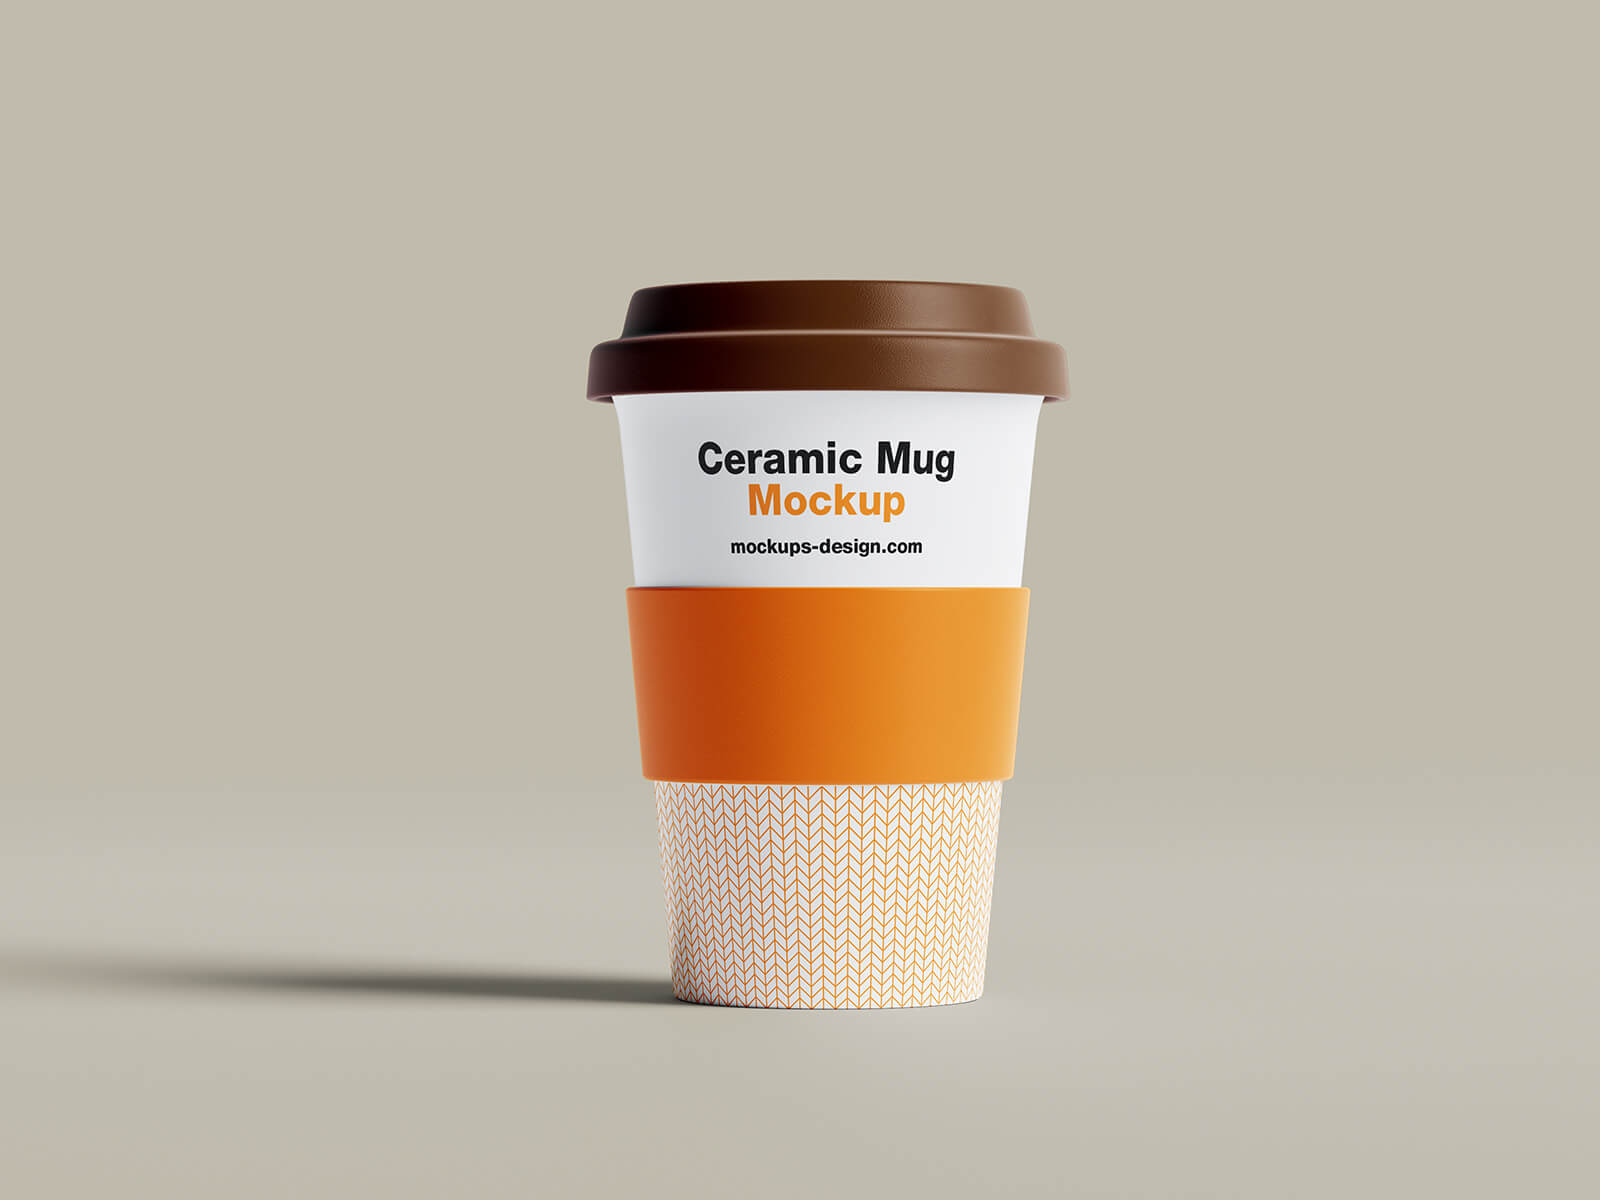 5-Free-Reusable-Ceramic-Mug-With-Cap-Mockup-PSD-Files